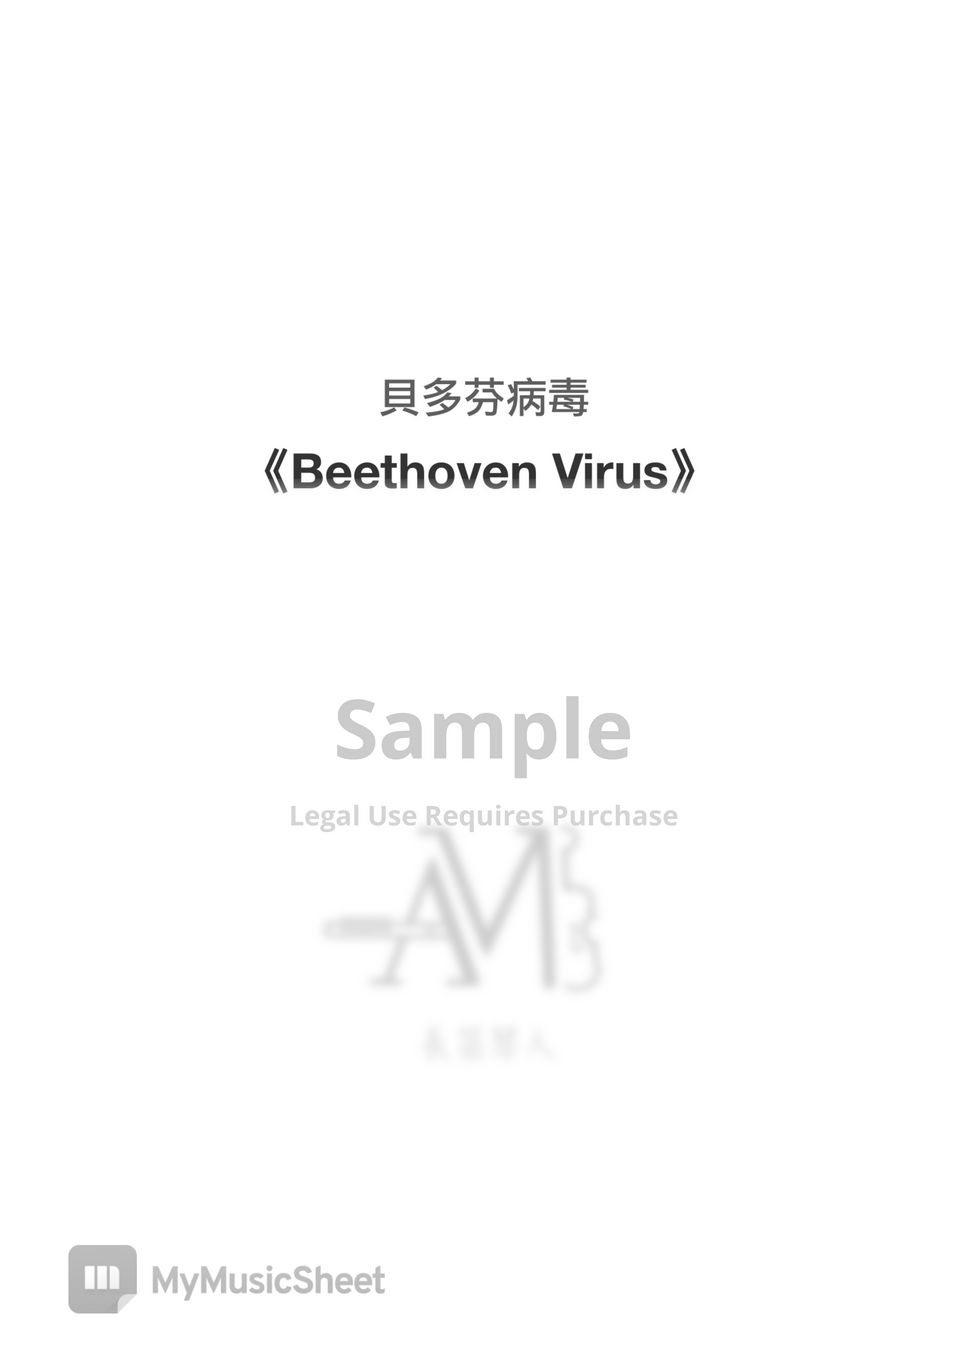 Diana Boncheca - 貝多芬病毒 Beethoven Virus (長笛小提琴重奏譜) by 長笛琴人